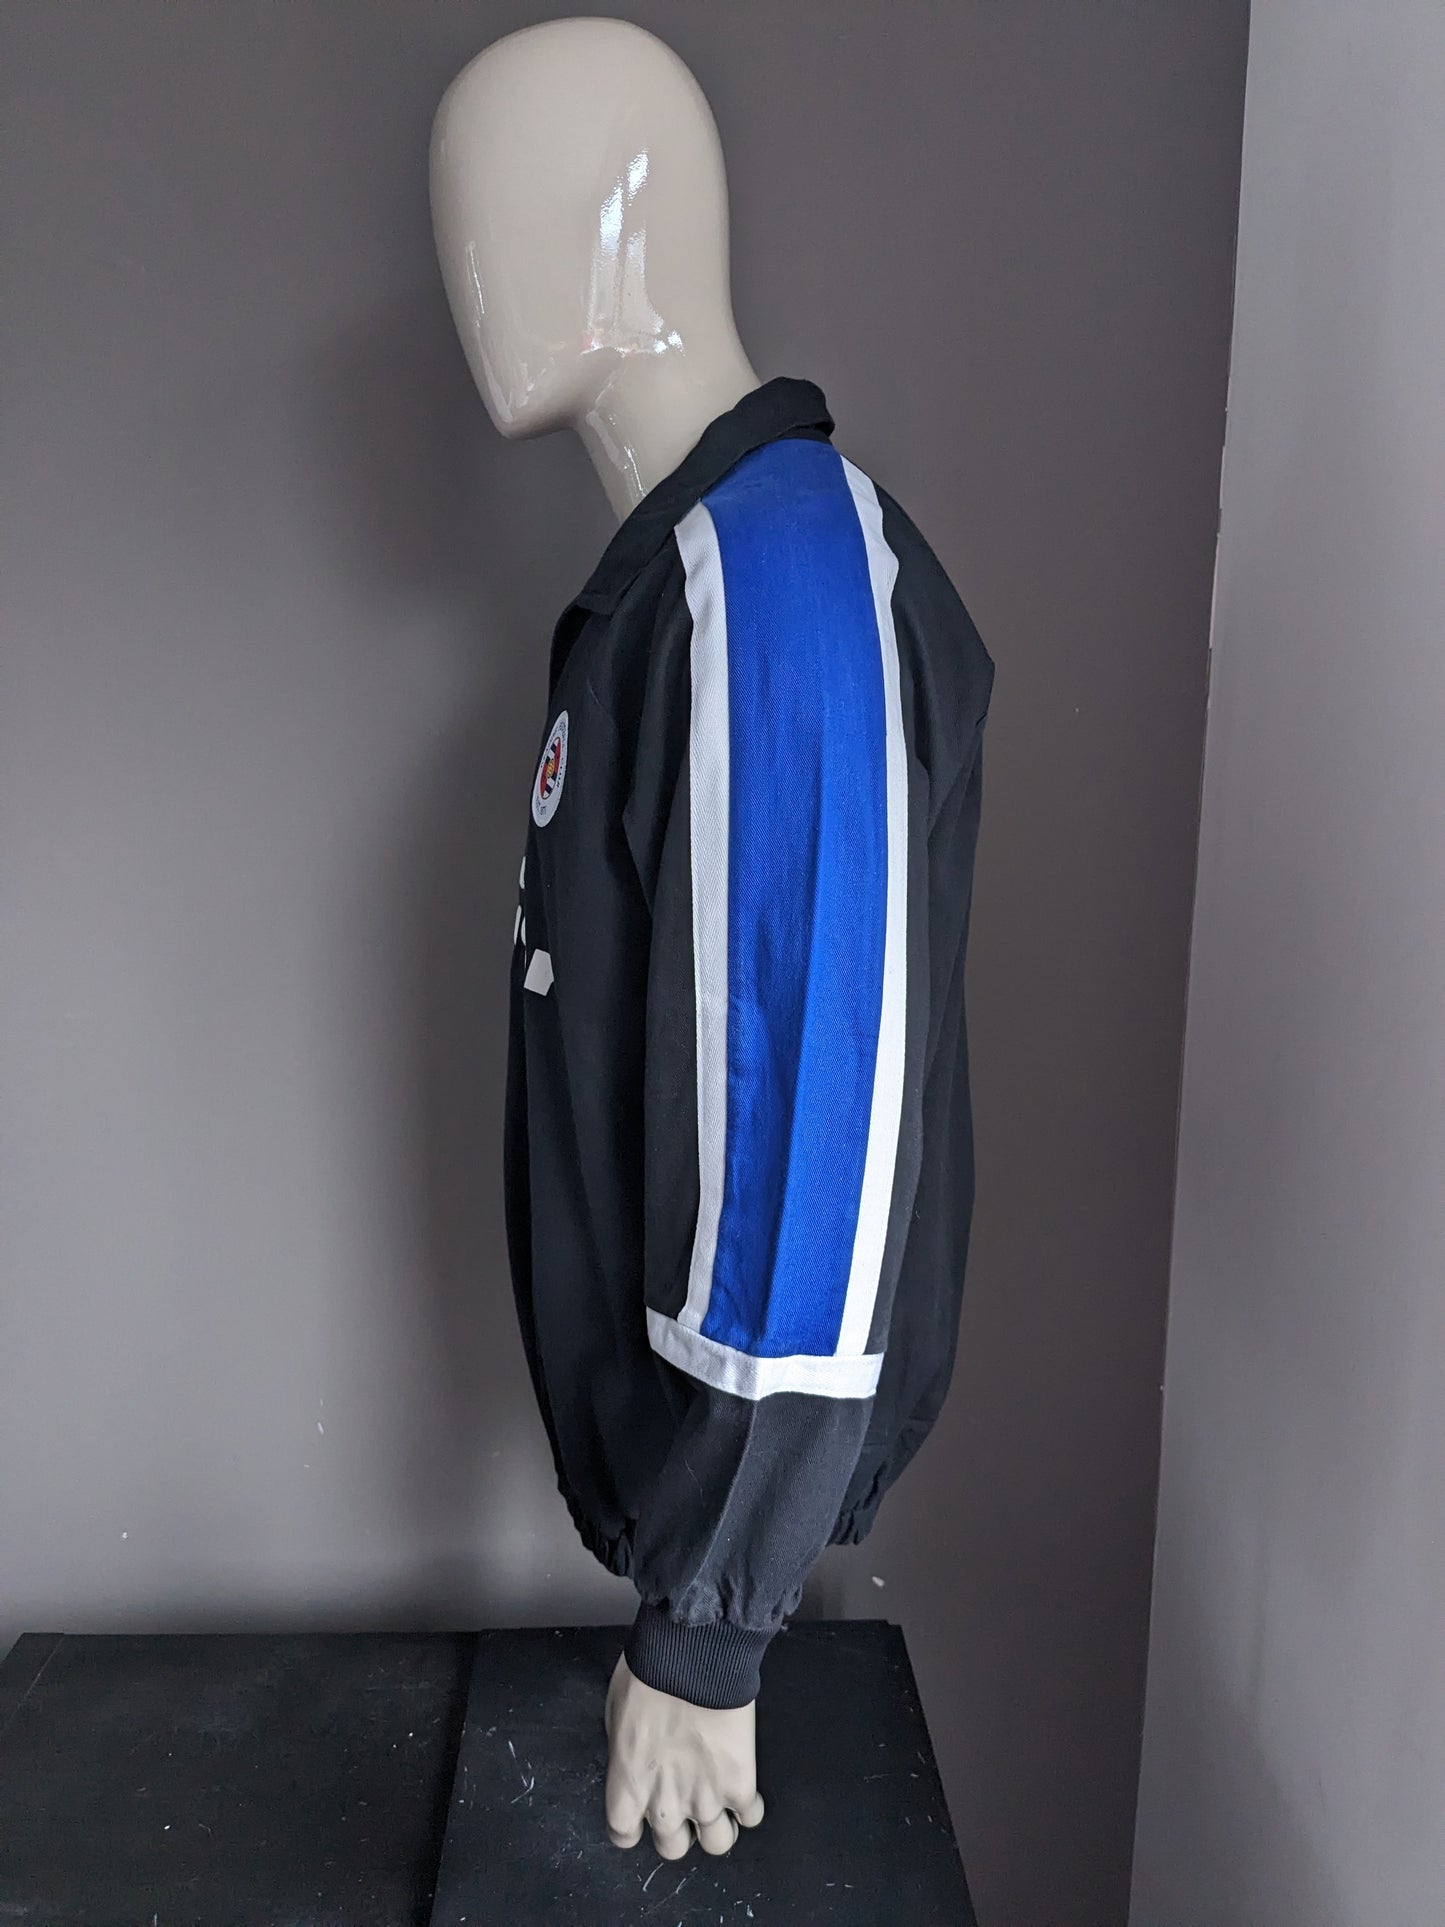 Mizuno Original "Reading Football Club" polo trui. Zwart Wit Blauw gekleurd. Maat XL